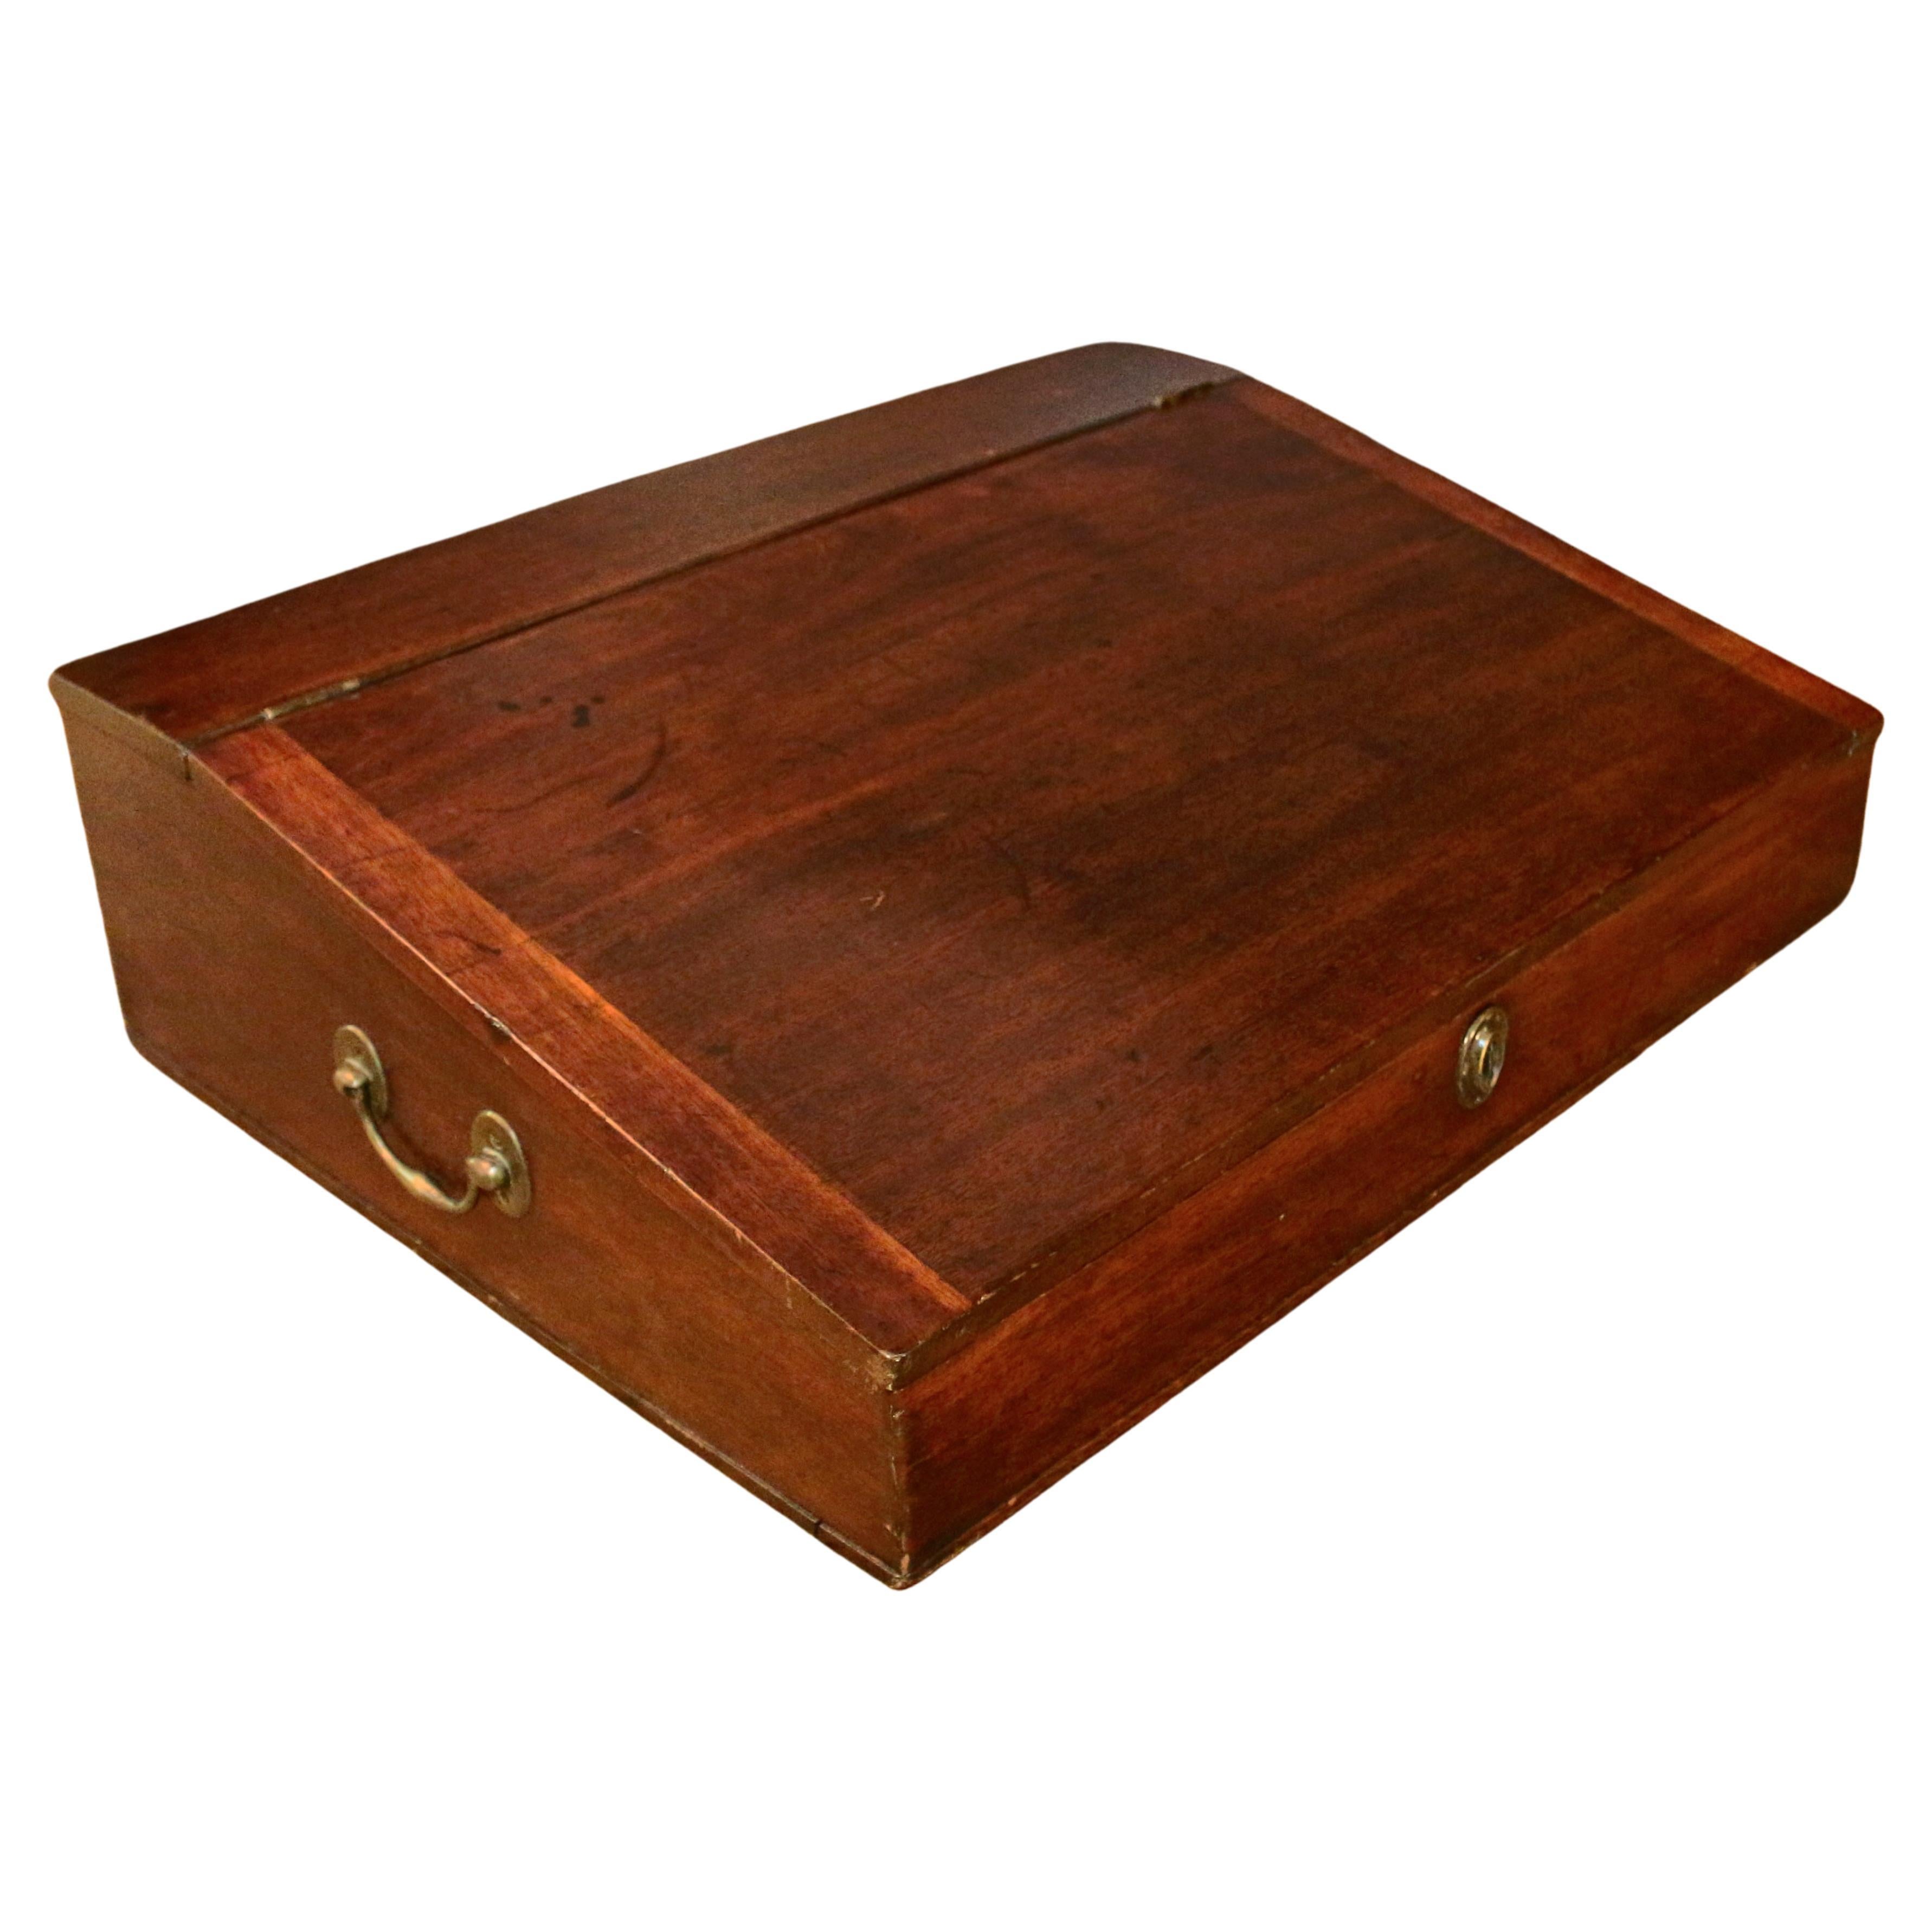 Circa 1780s Mahogany Georgian Writing Slope Box